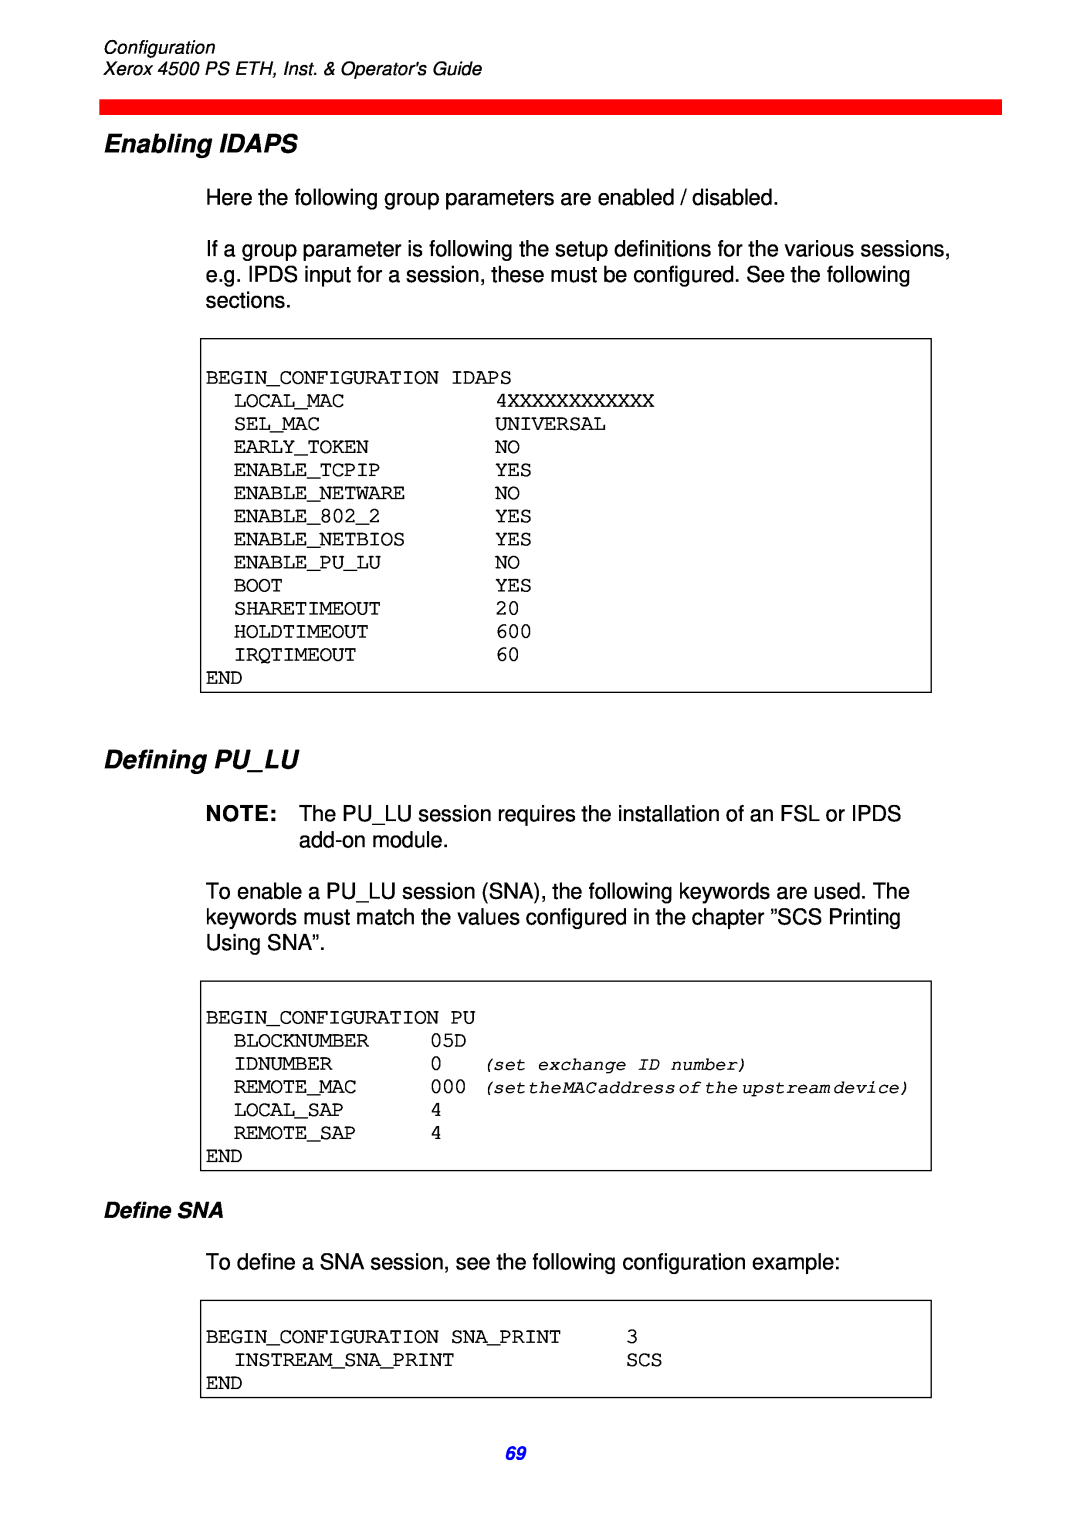 Xerox 4500 ps eth instruction manual Enabling IDAPS, Defining PULU, Define SNA 